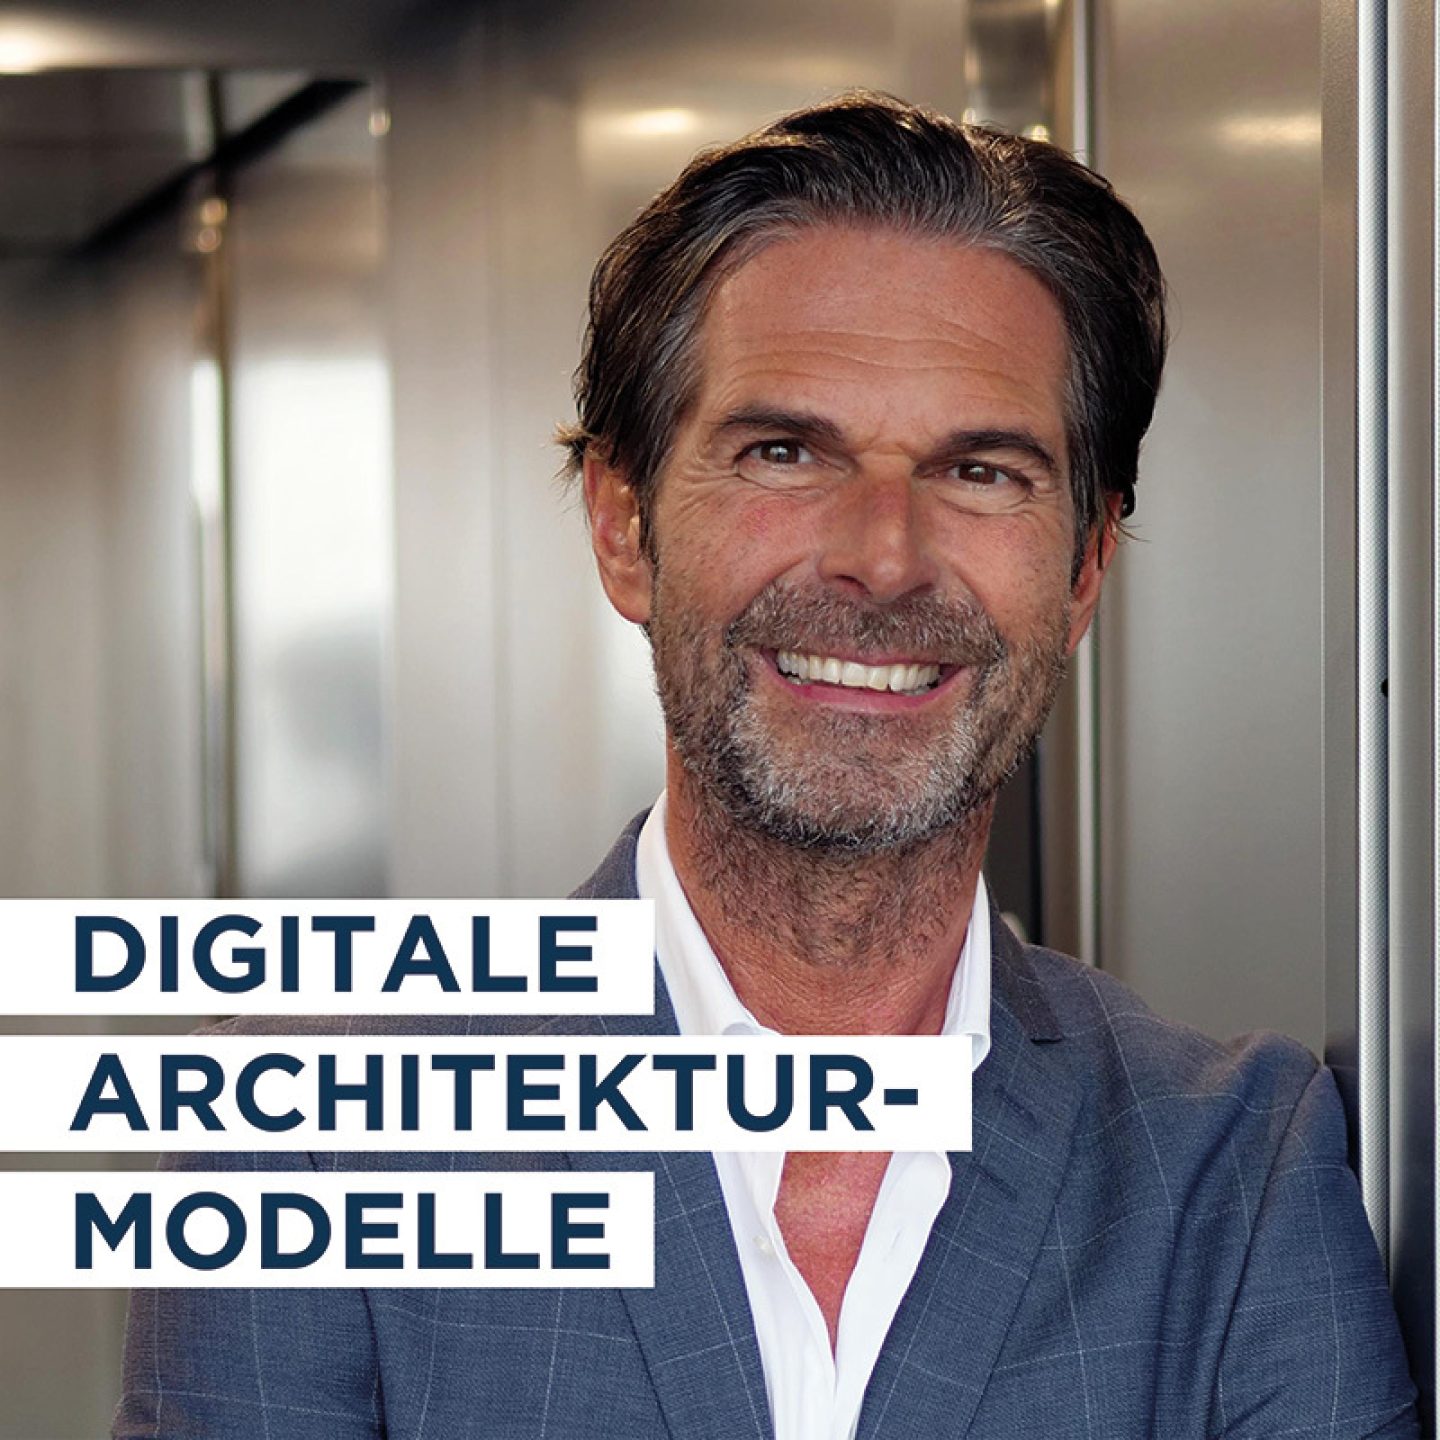 Mediathek digitale architektur modelle thomas pasquale